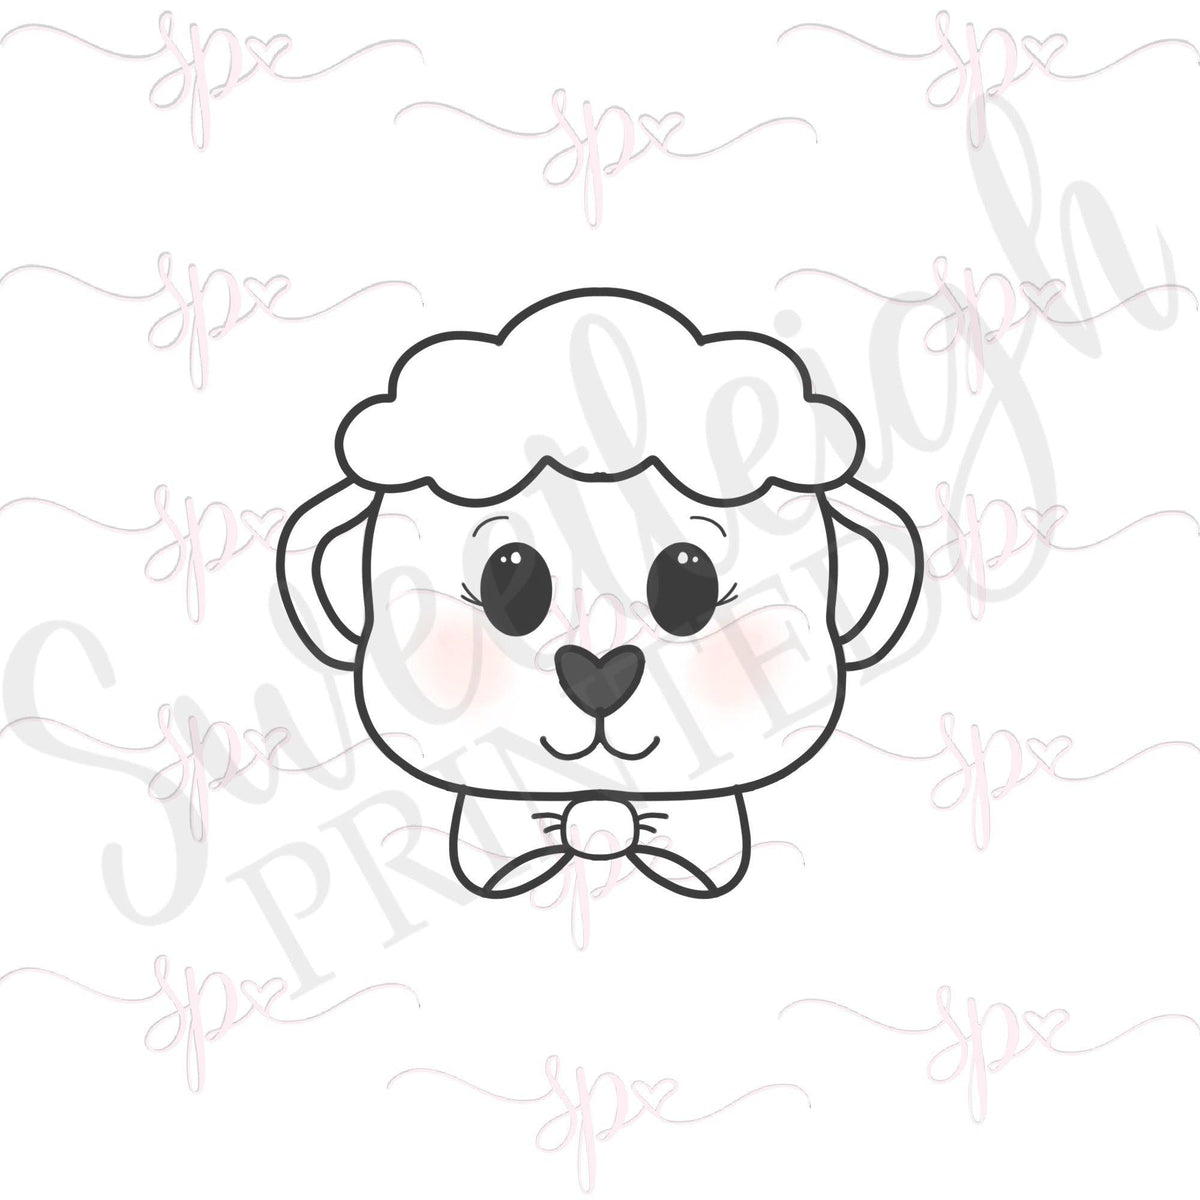 Bowtie Lamb Face 2020 Cookie Cutter - Sweetleigh 